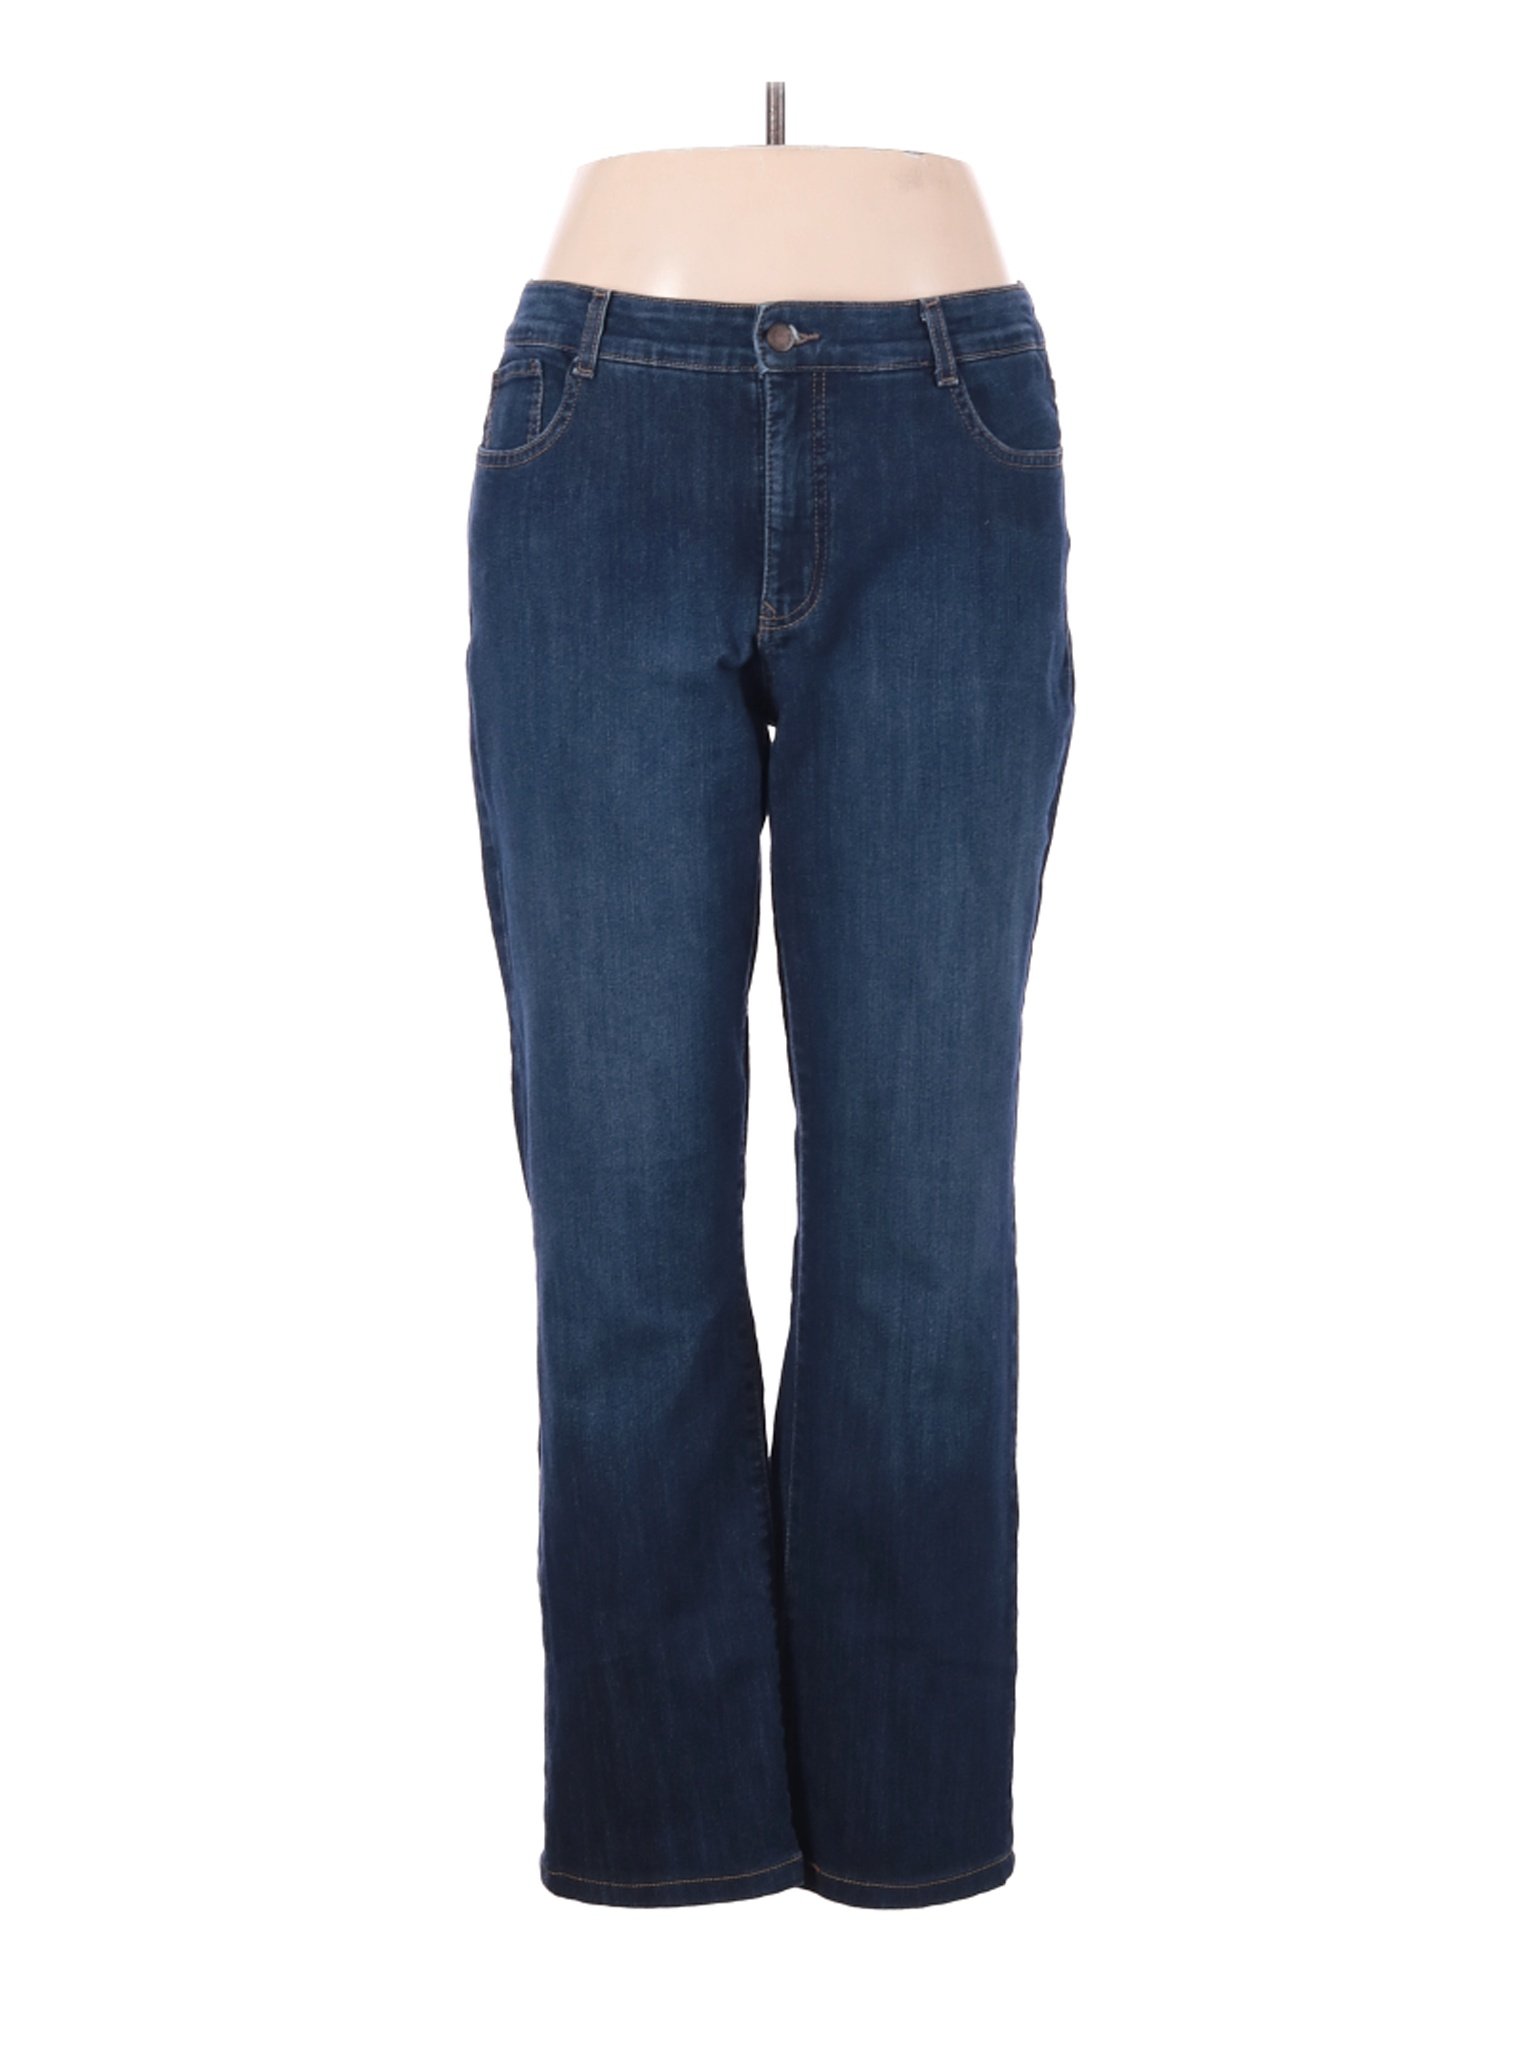 Bandolino Women Blue Jeans 14 | eBay